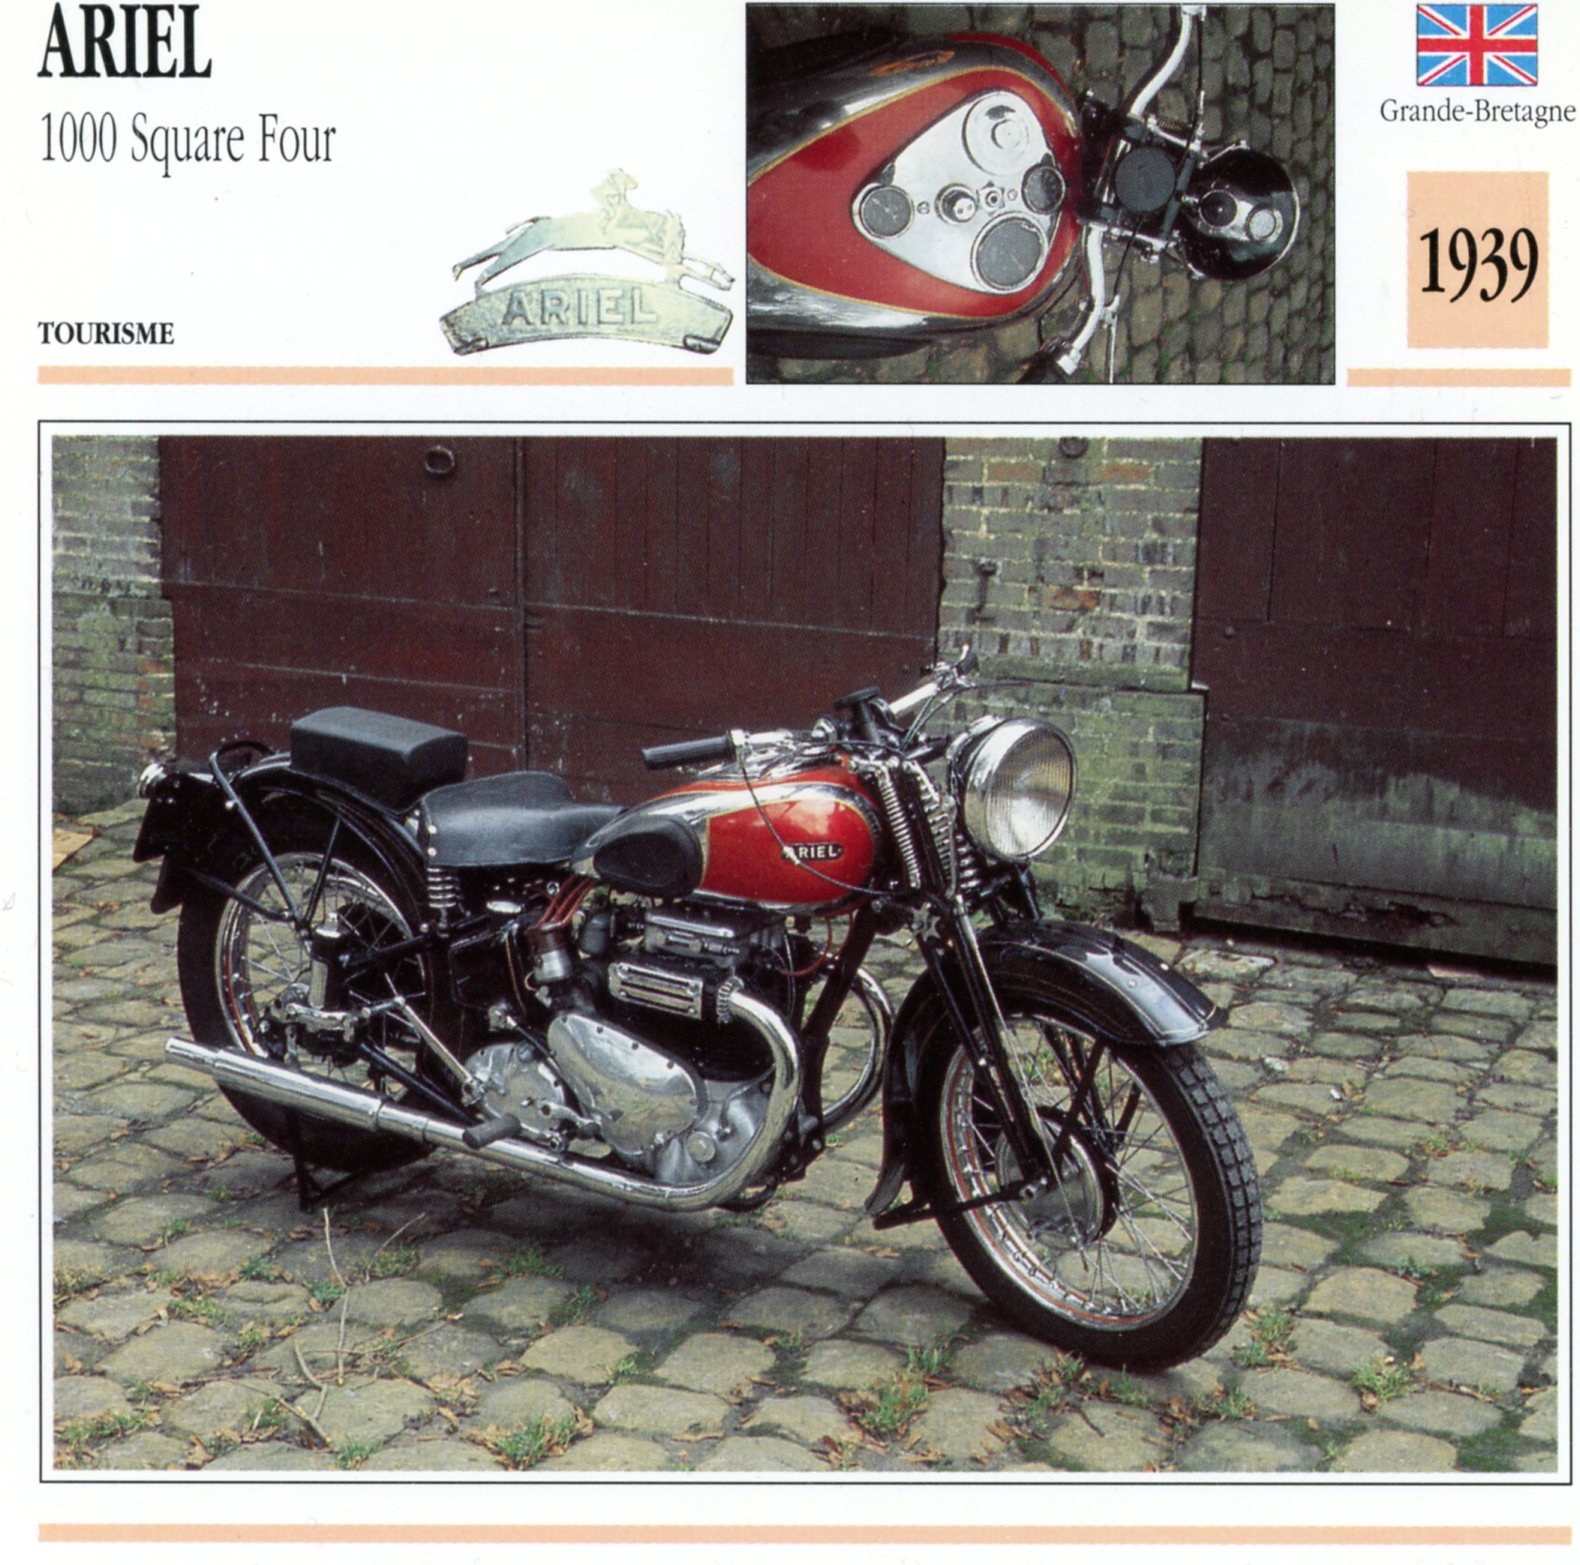 LEMASTERBROCERS-ARIEL 1000 SQUARE FOUR 1939 - CARTE CARD FICHE MOTO CARACTERISTIQUES